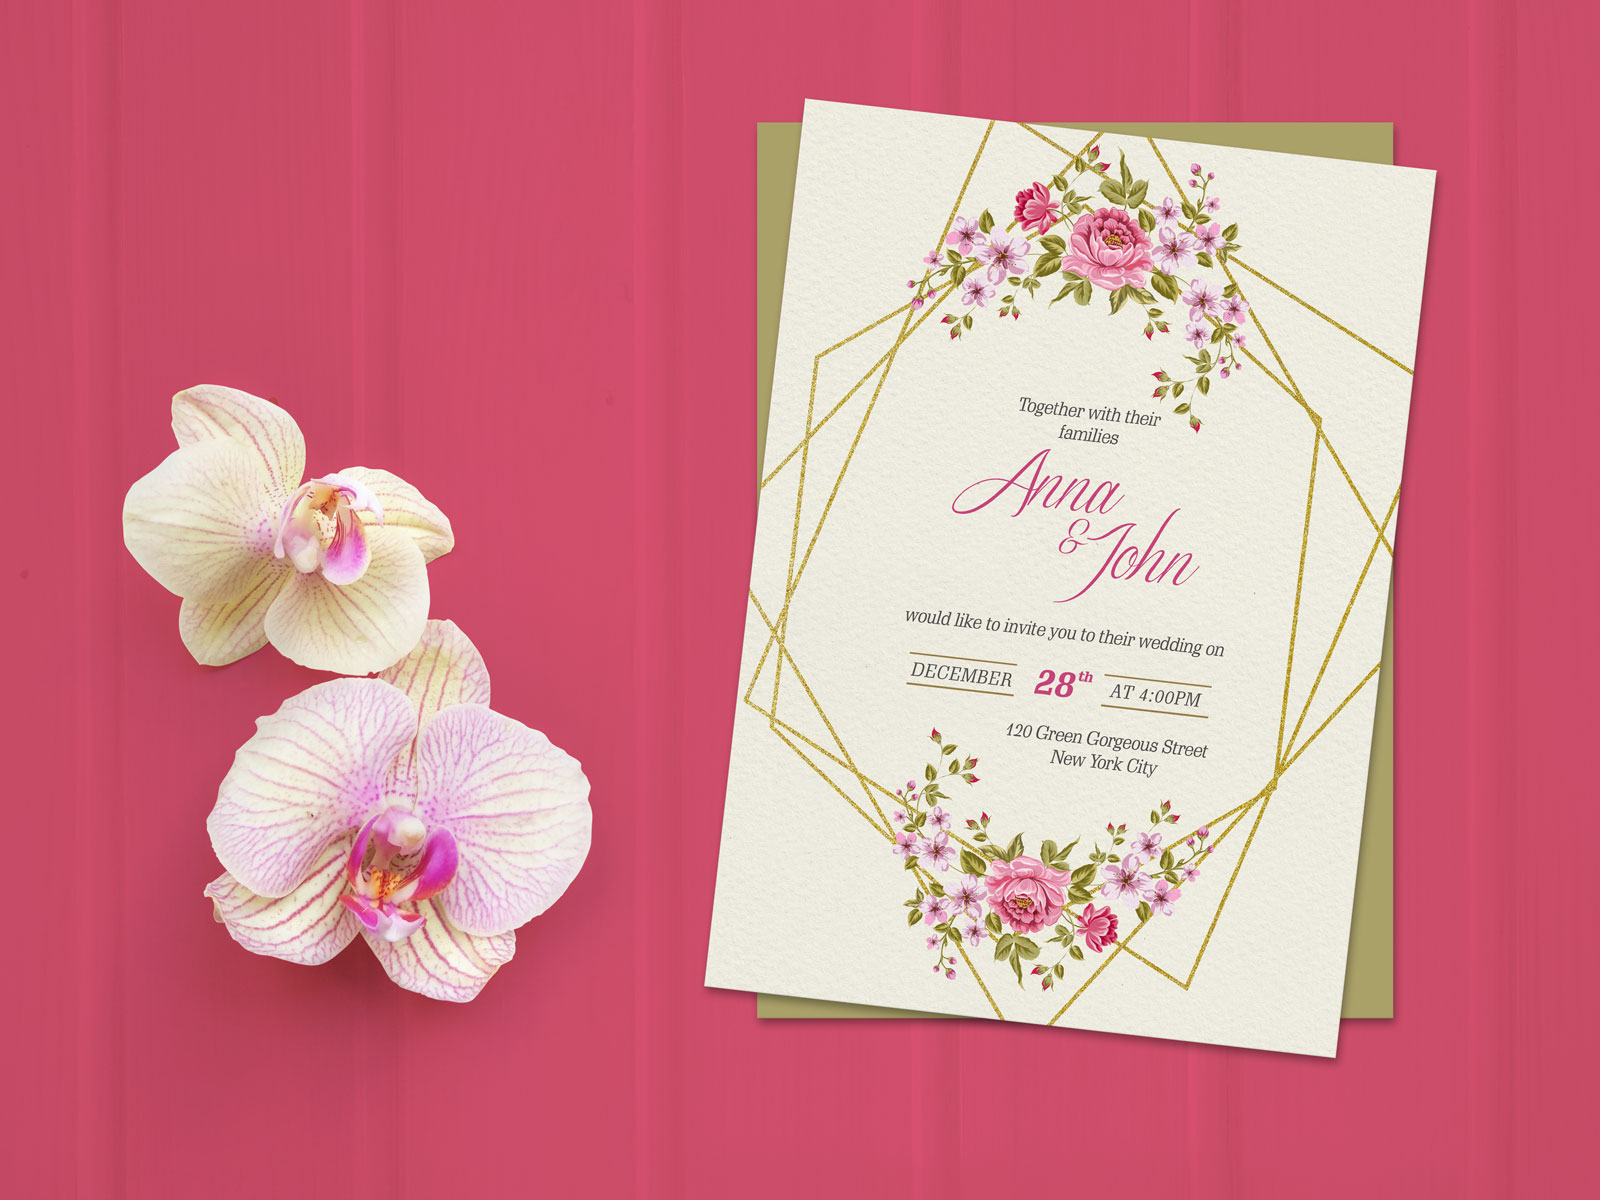 Download Free Wedding Invitation Card Template & Mockup PSD | Designbolts